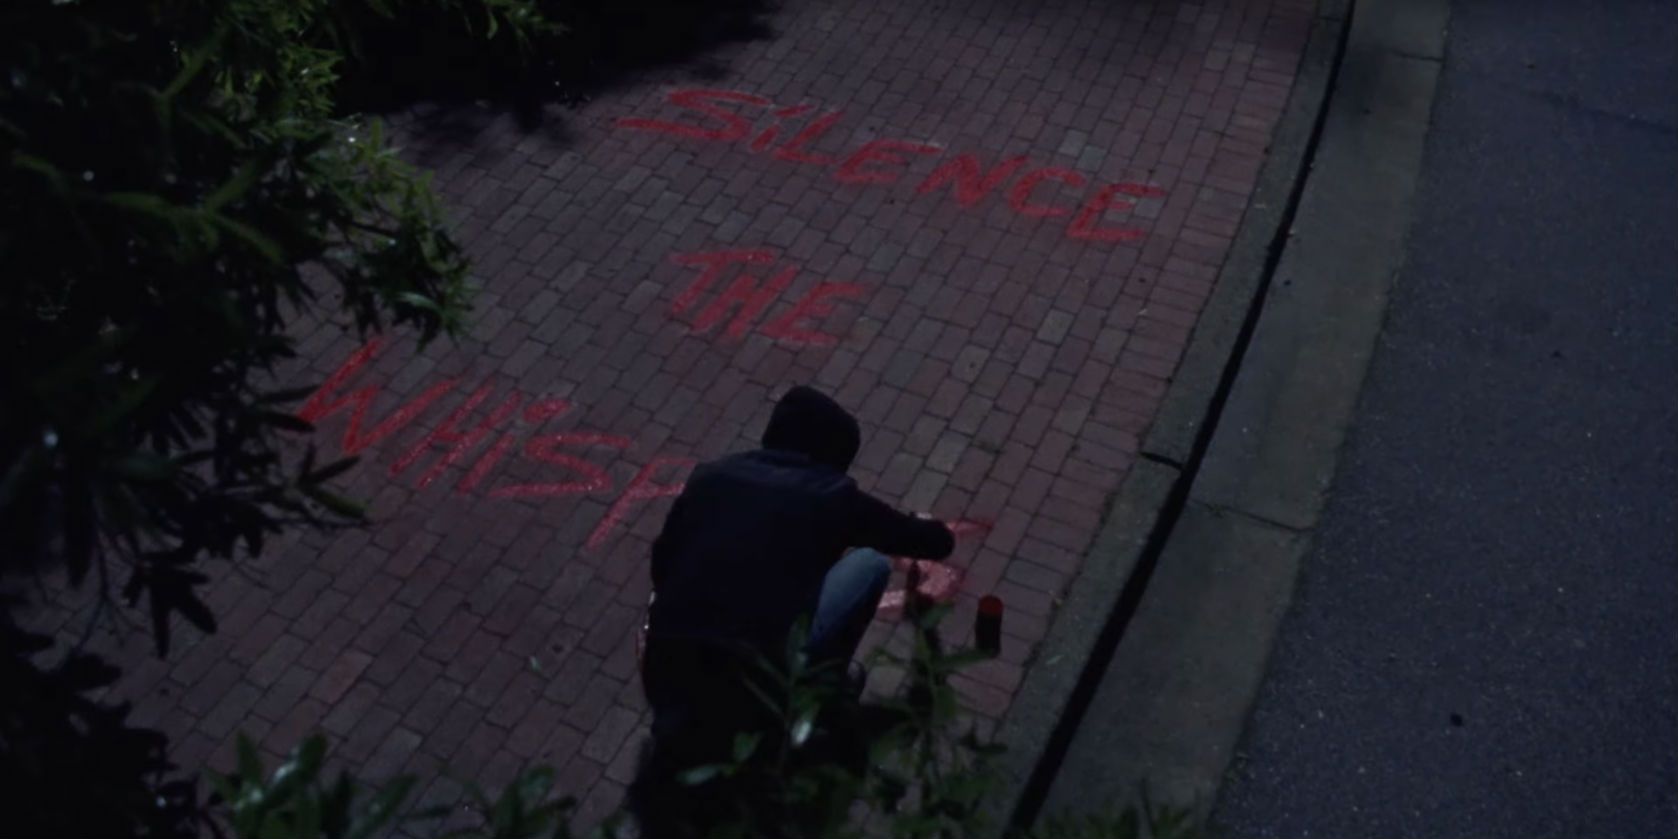 Silence the Whisperers graffiti in The Walking Dead season 10 trailer